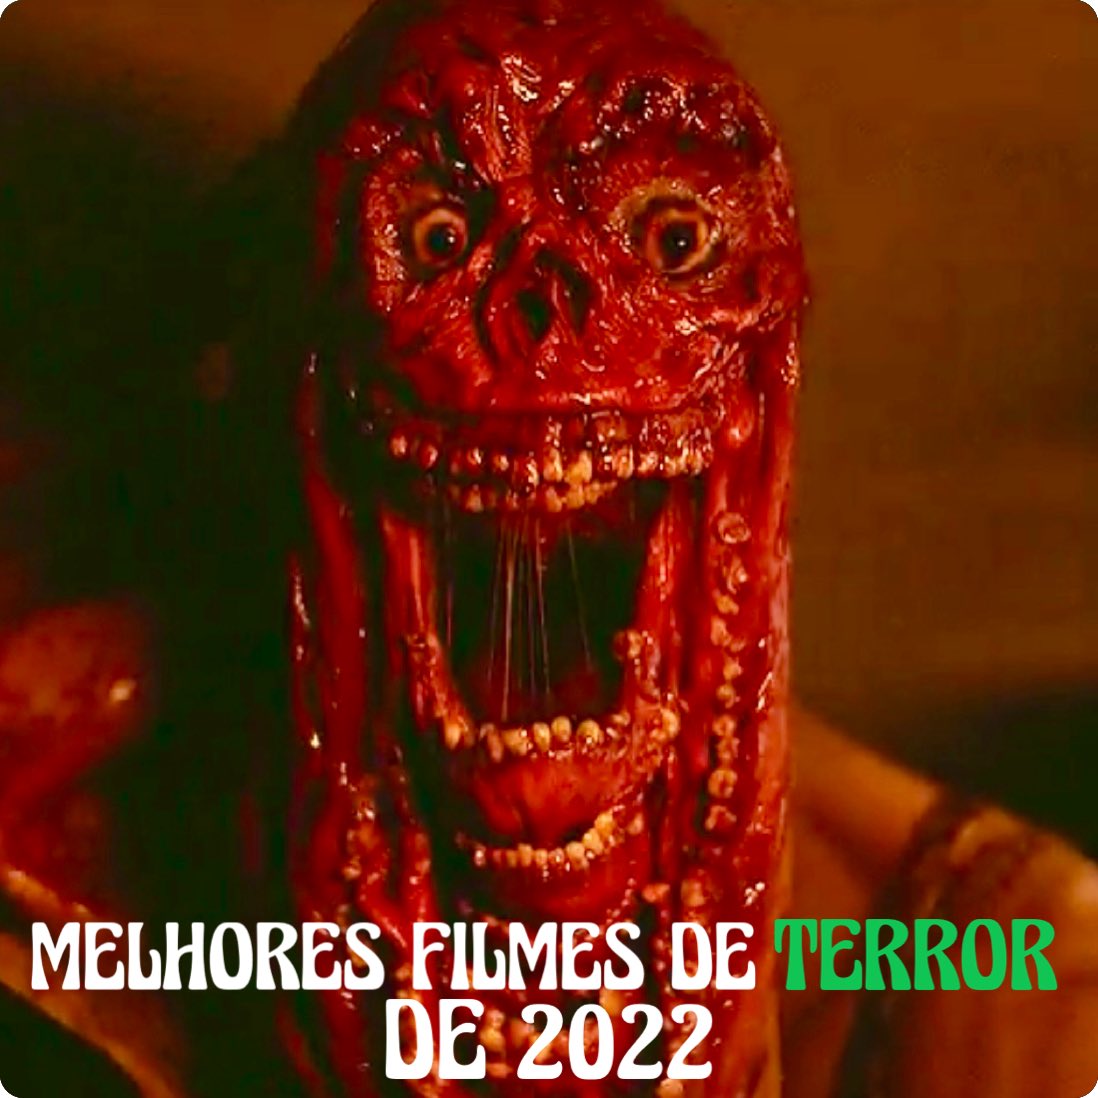 Filmes de terror de 2022